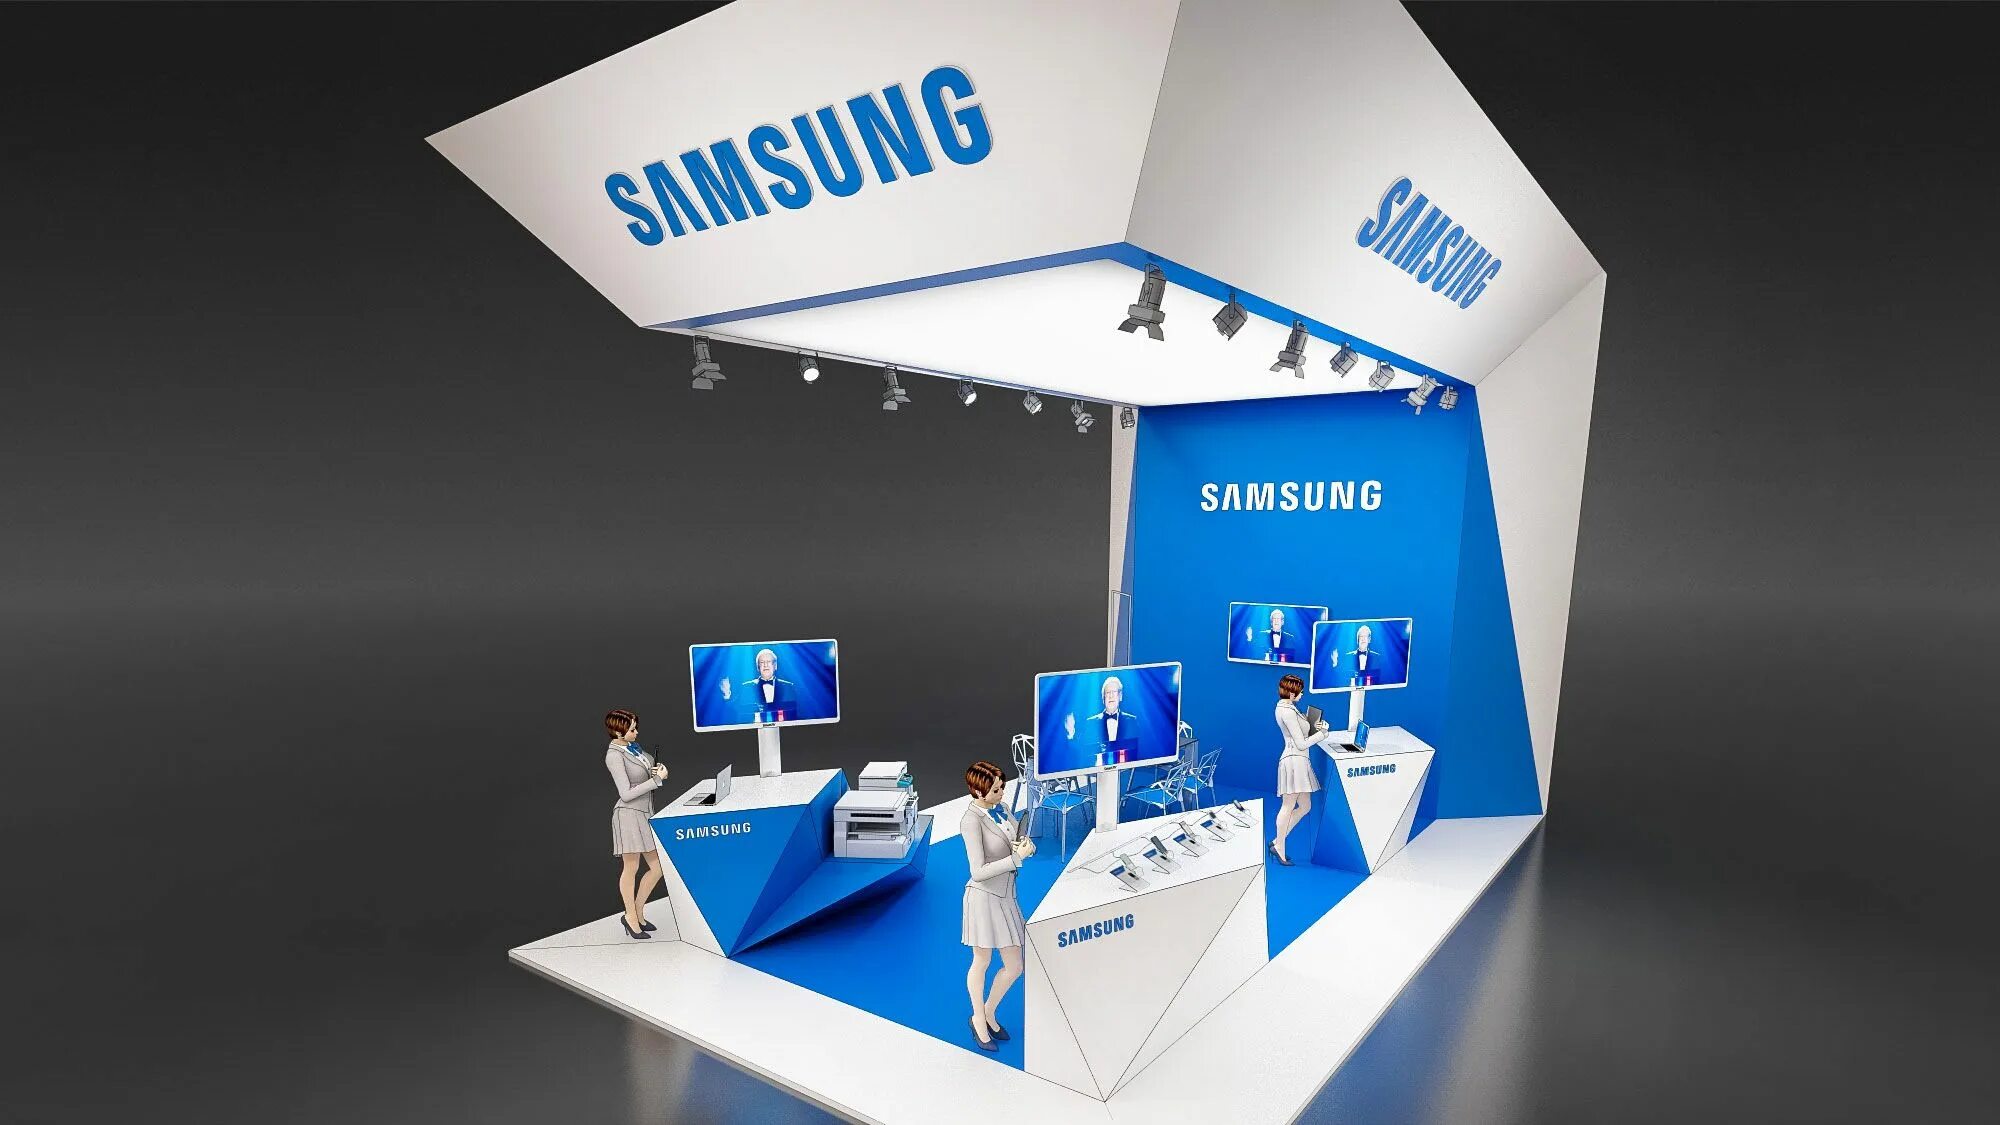 Https samsung net. Стенд самсунг. Проект Samsung. Рекламный стенд самсунг. The Full стенд.